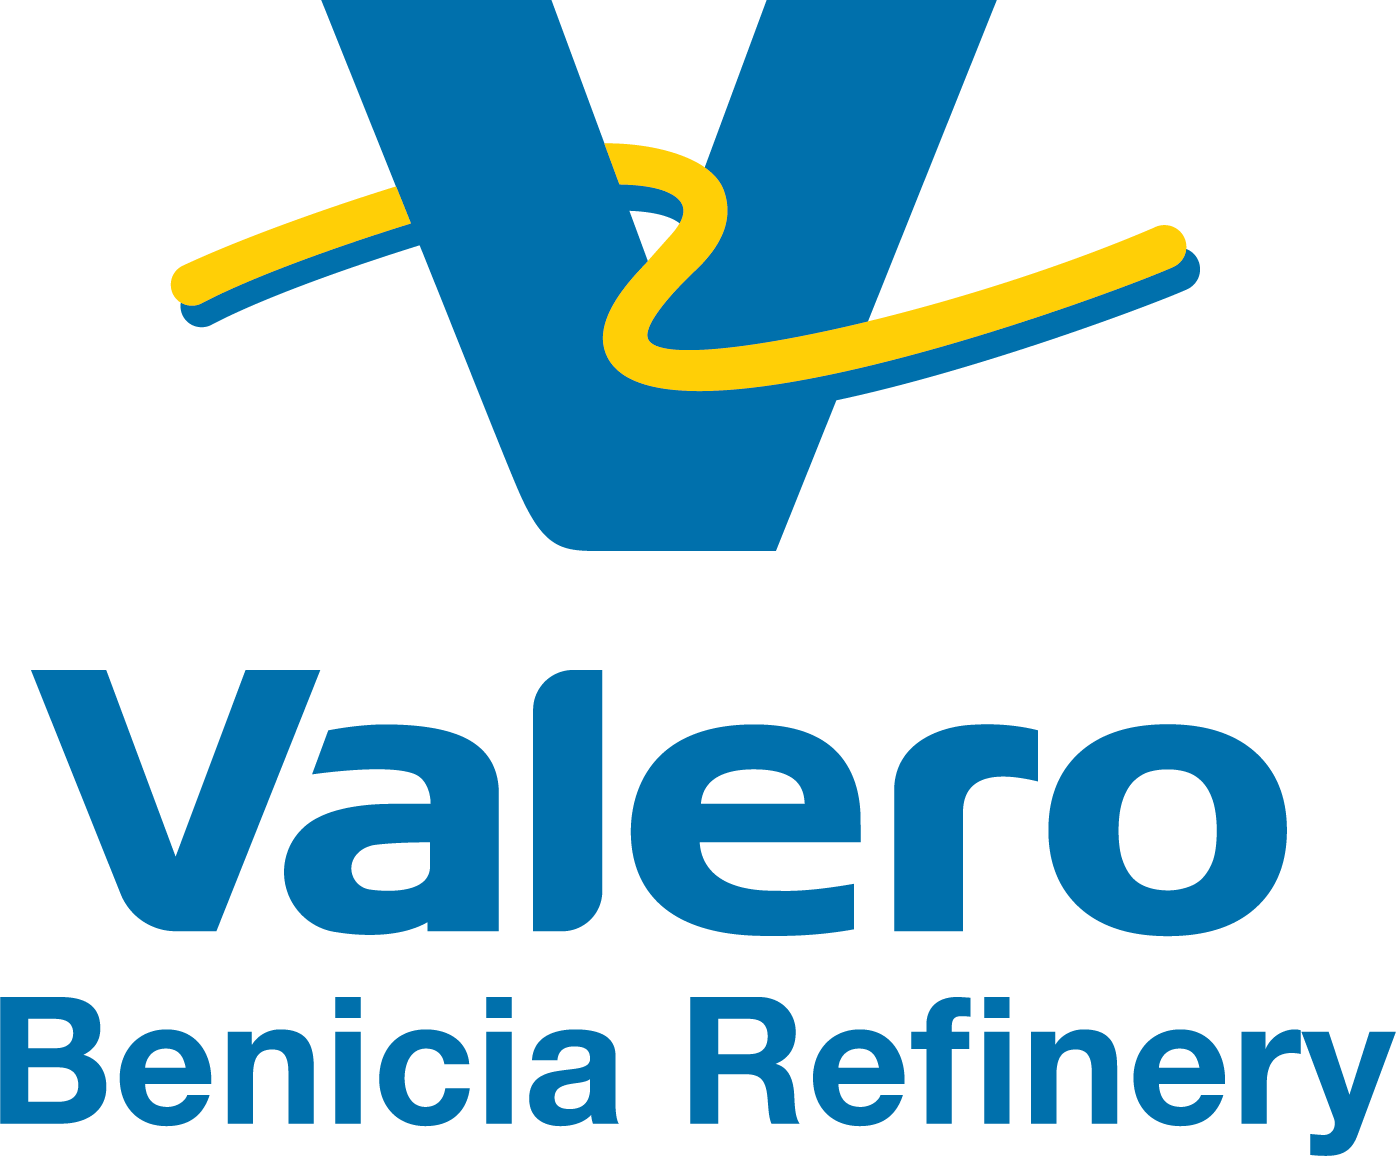 Valero Benicia Refinery